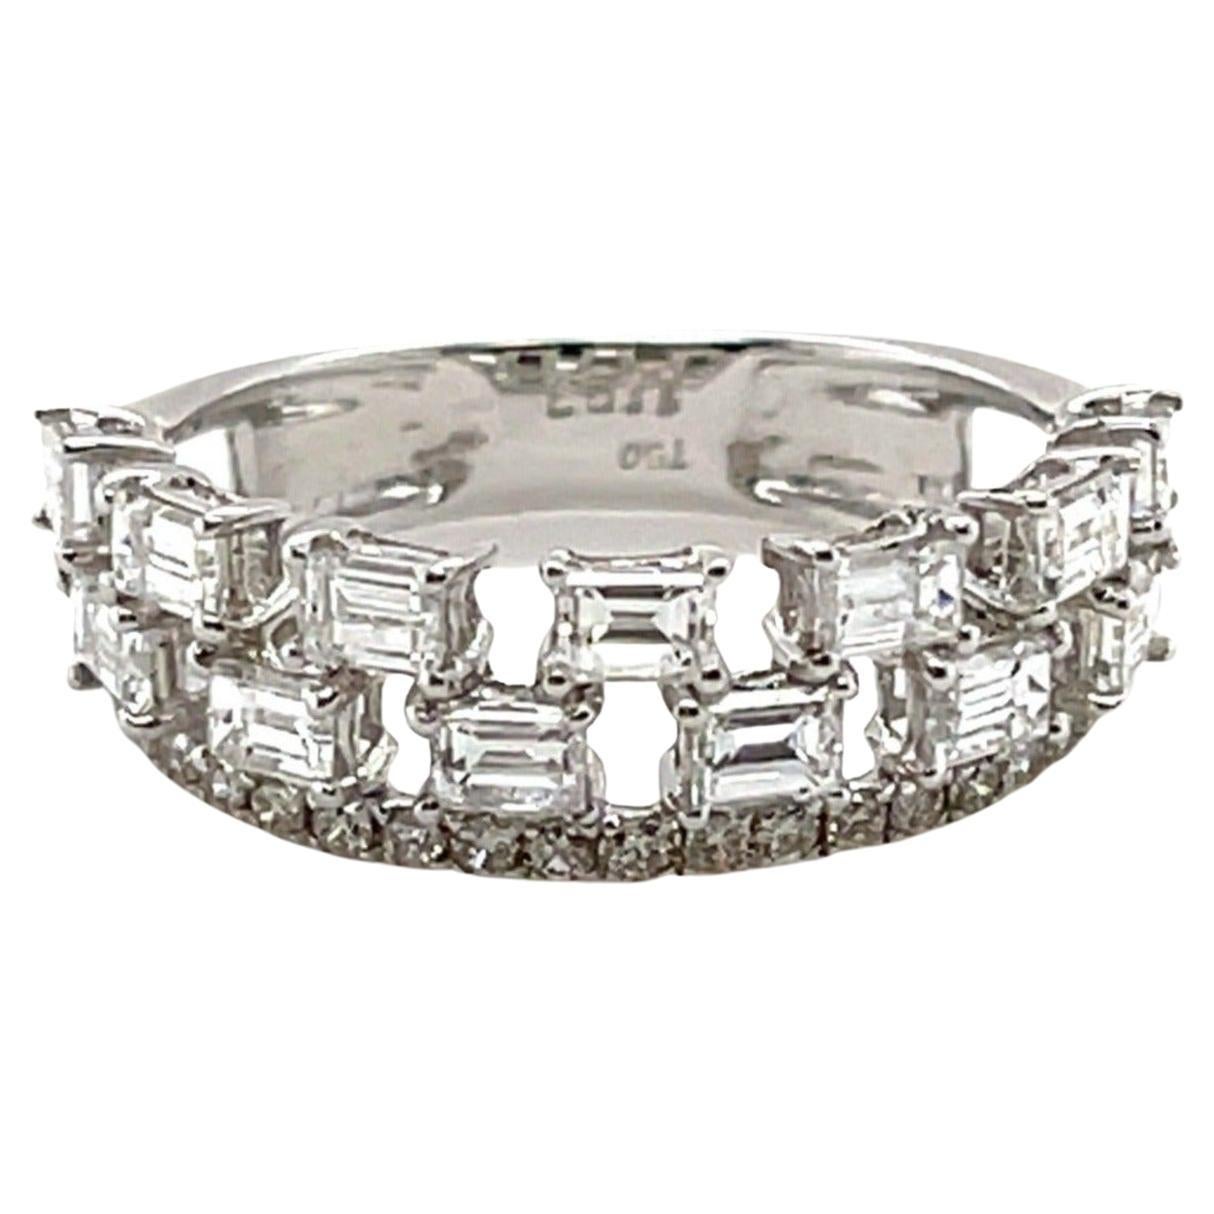 'Bela' Emerald Cut Diamond Ring